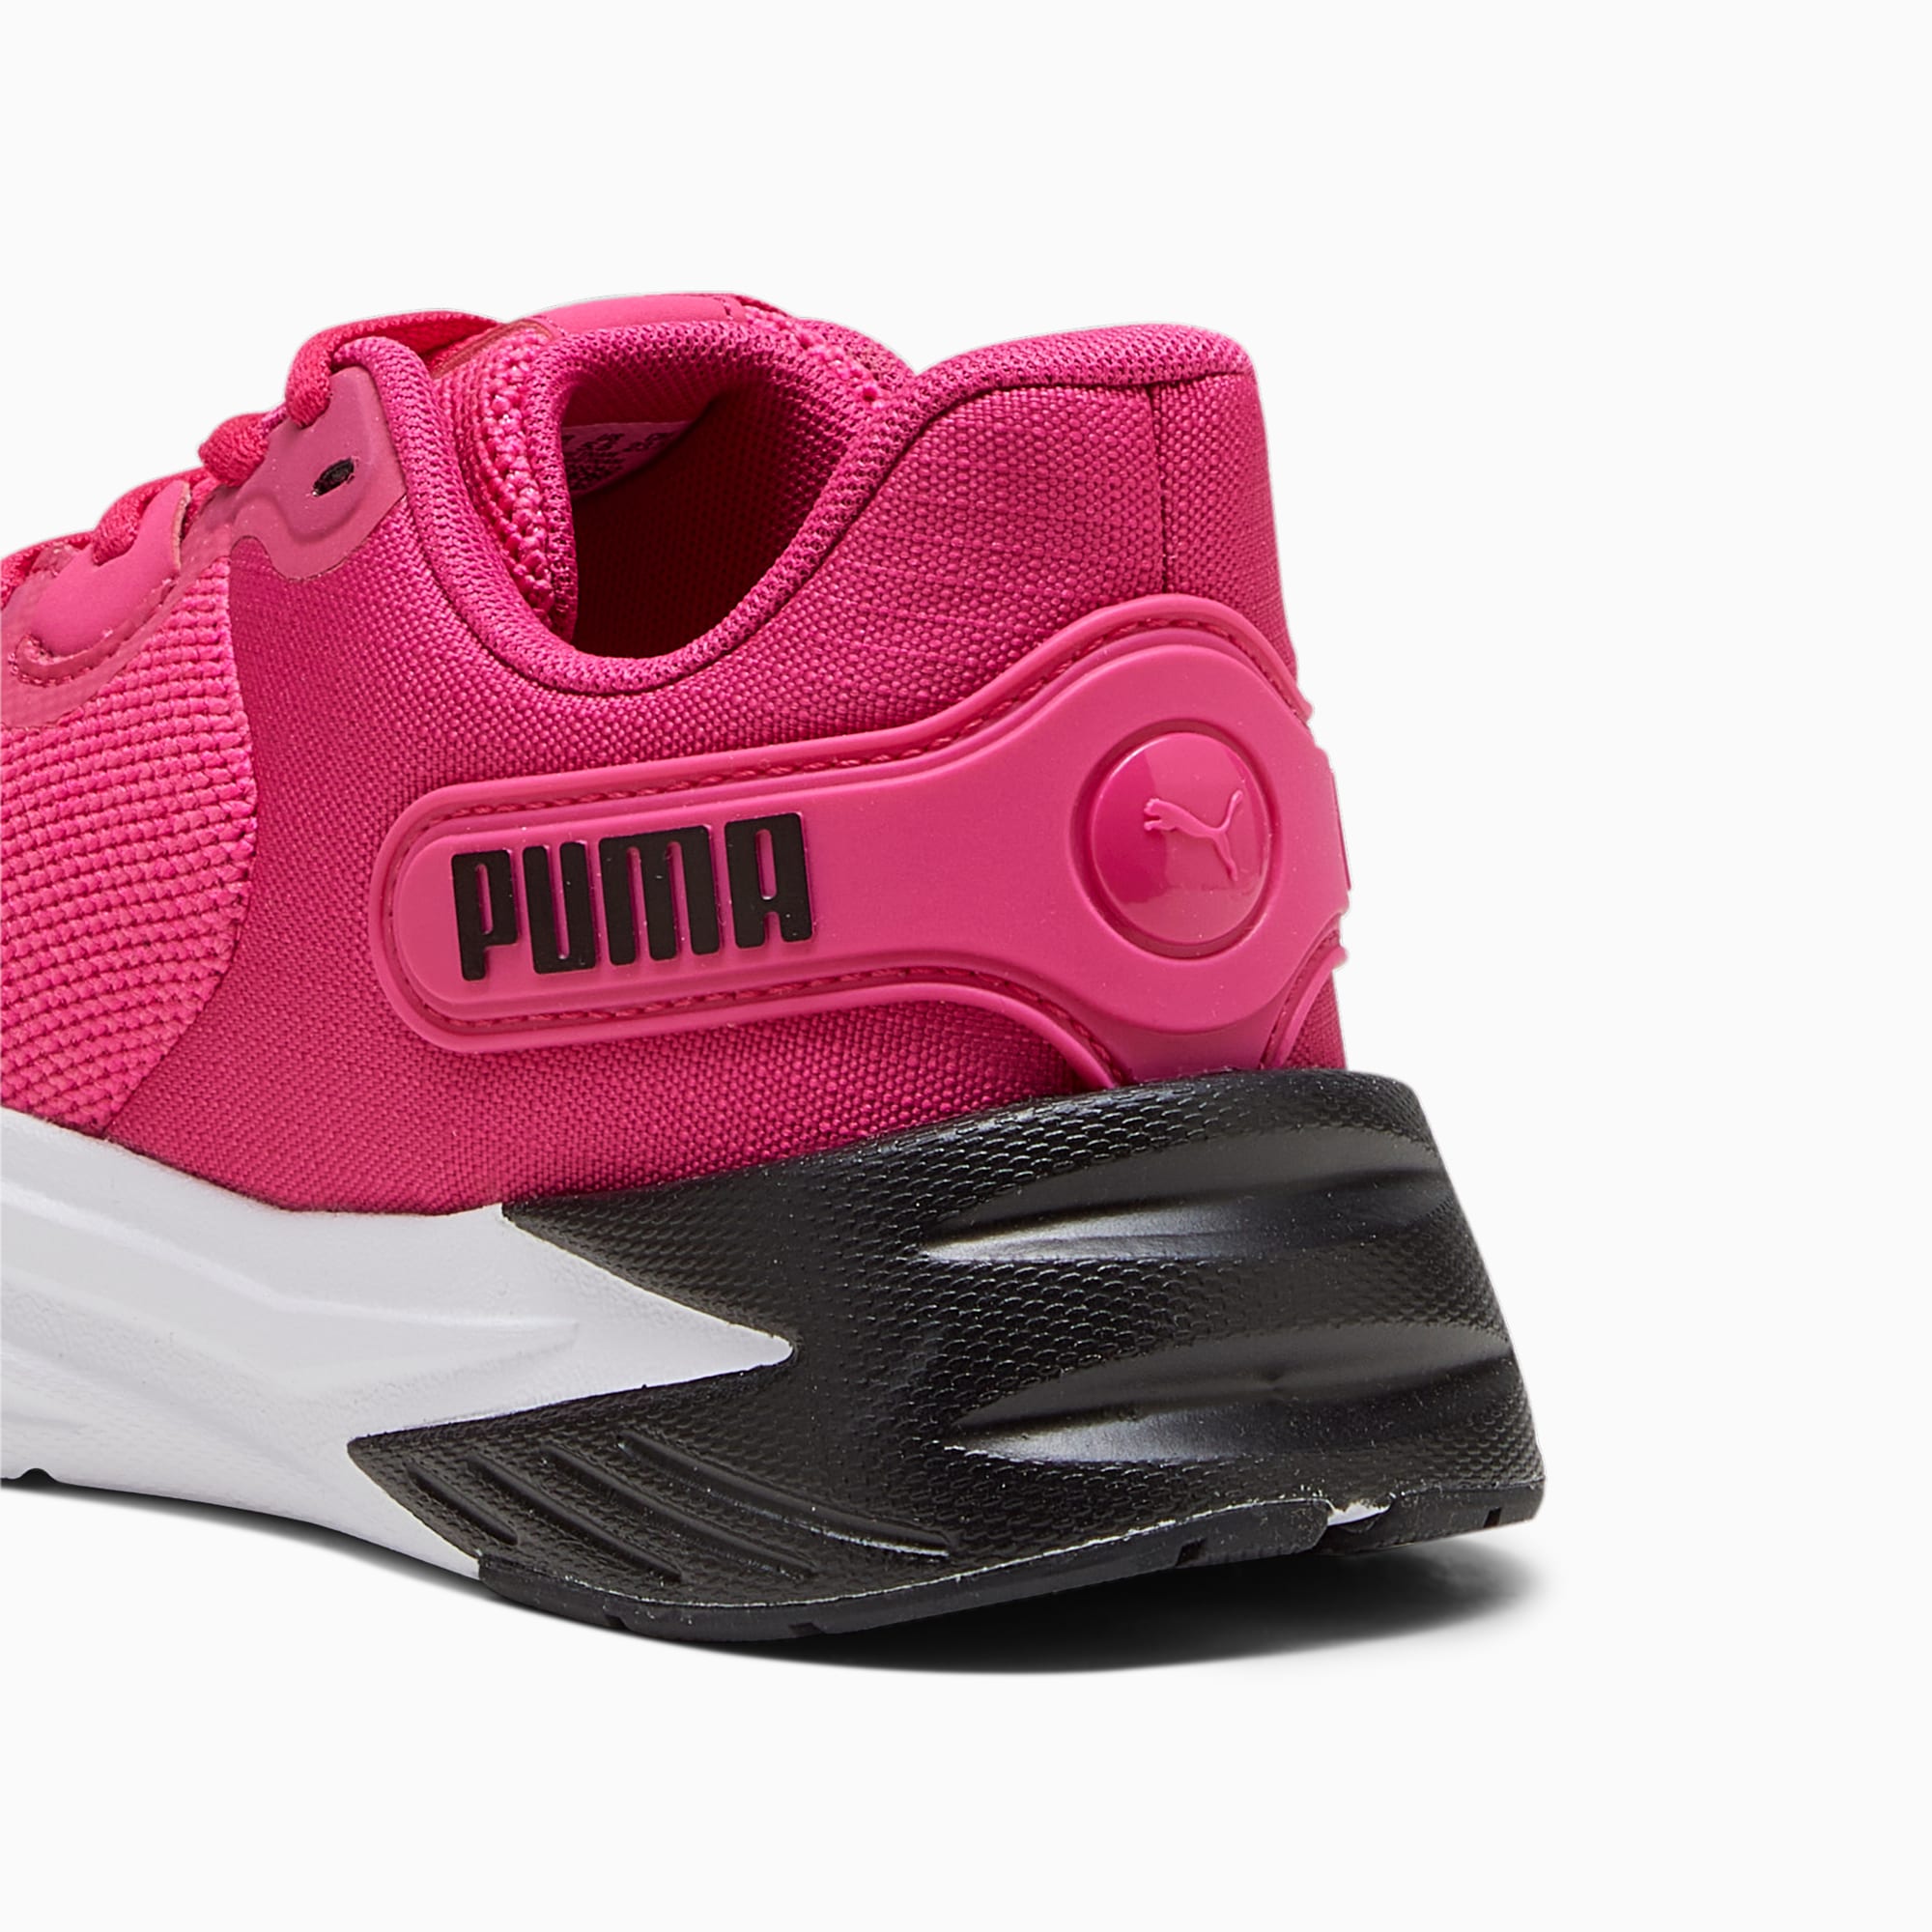 Women's PUMA Disperse XT 3 Training Shoes, Pink/White/Black